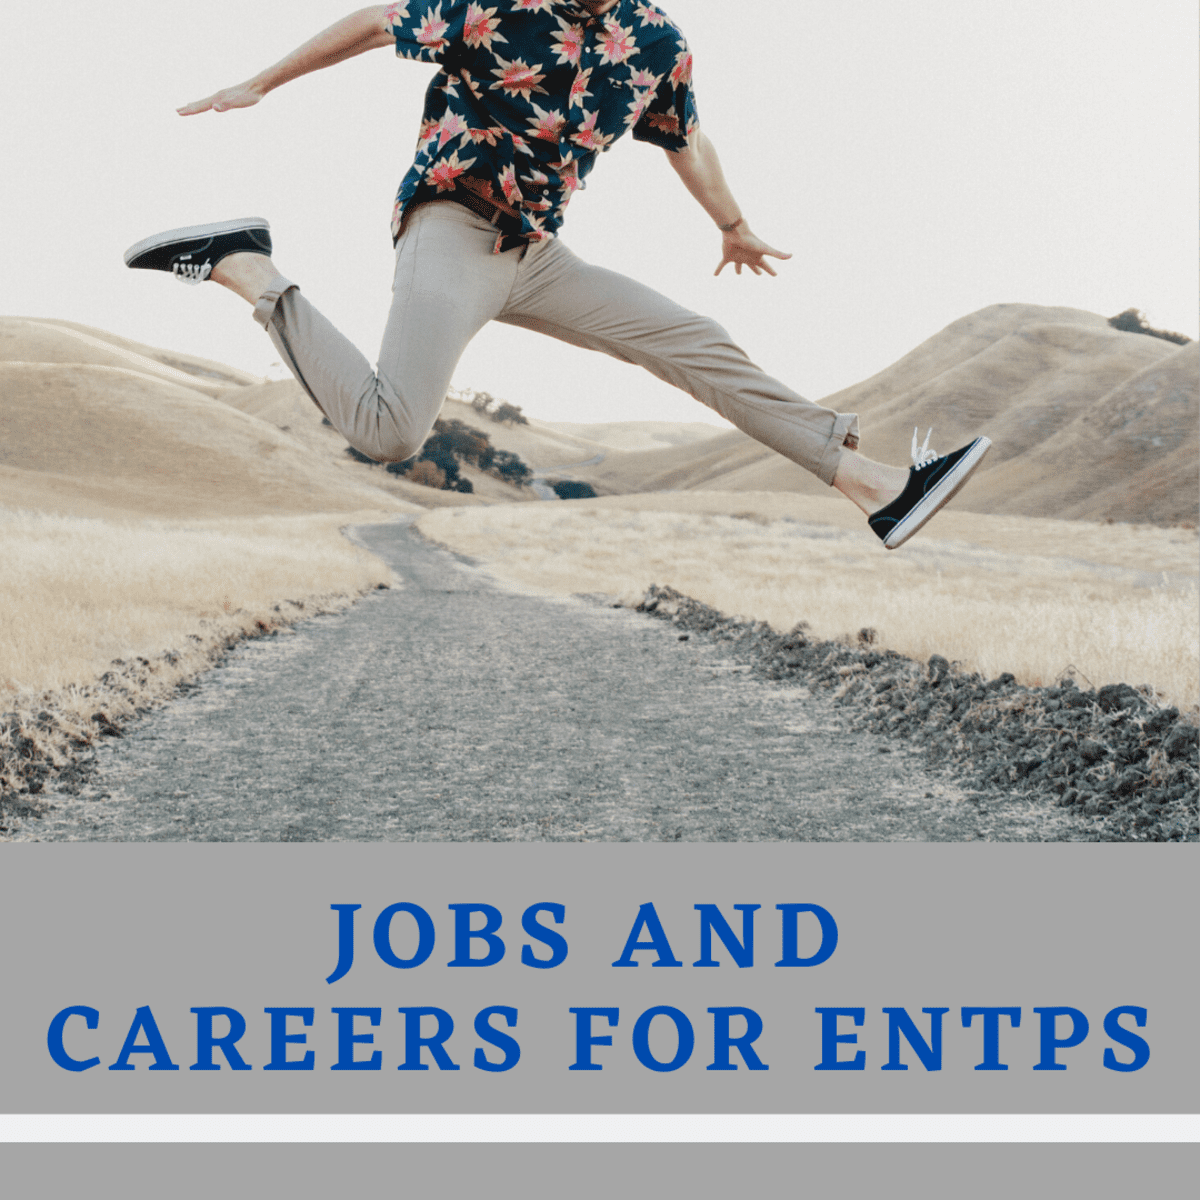 MBTI Types, ENTP Careers